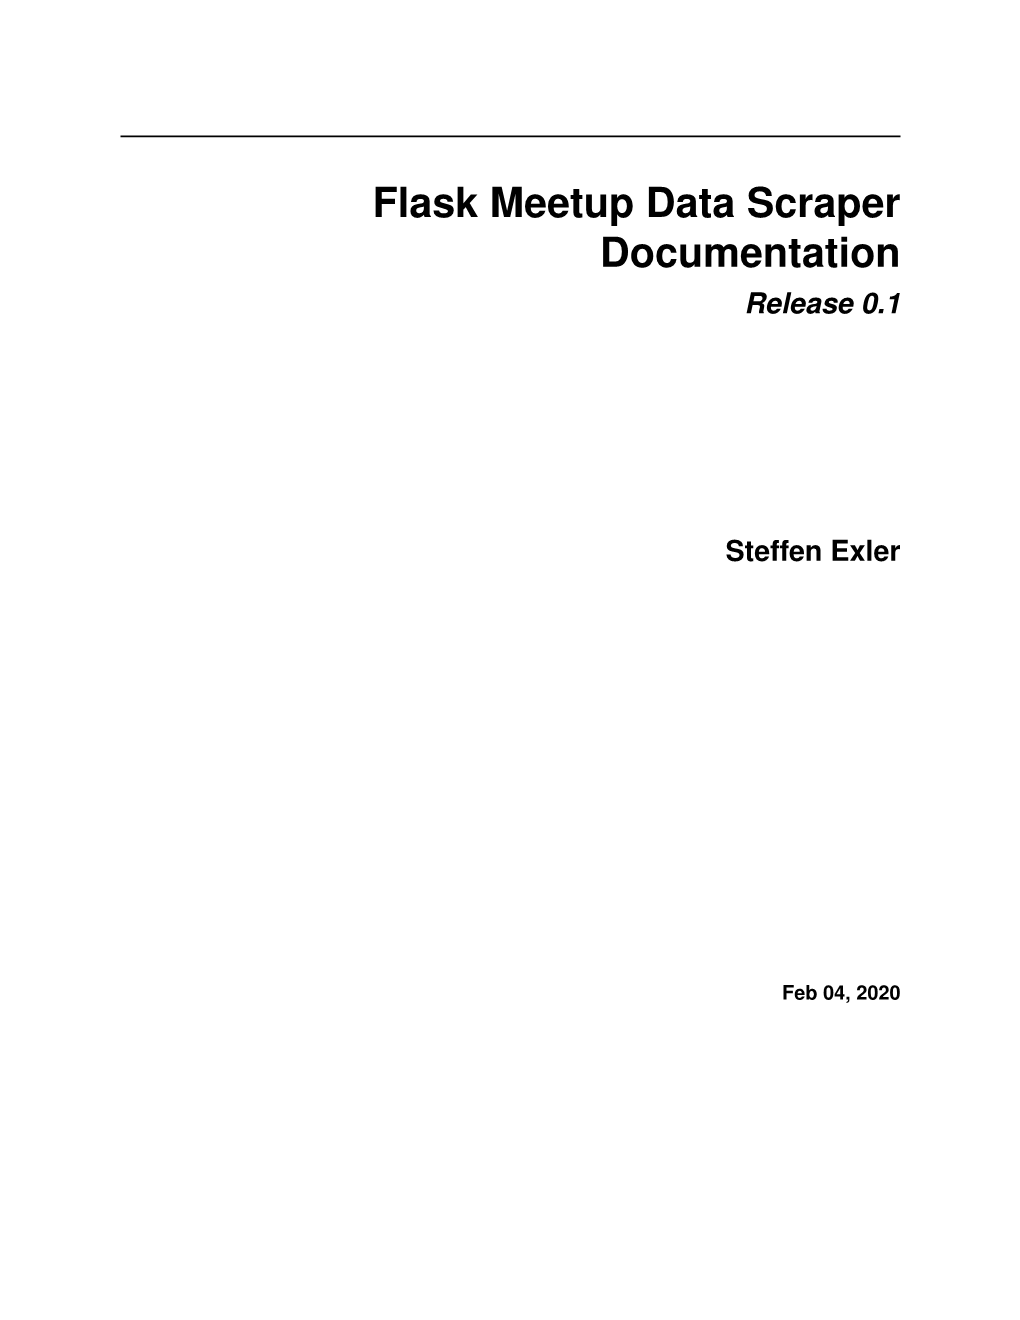 Flask Meetup Data Scraper Documentation Release 0.1